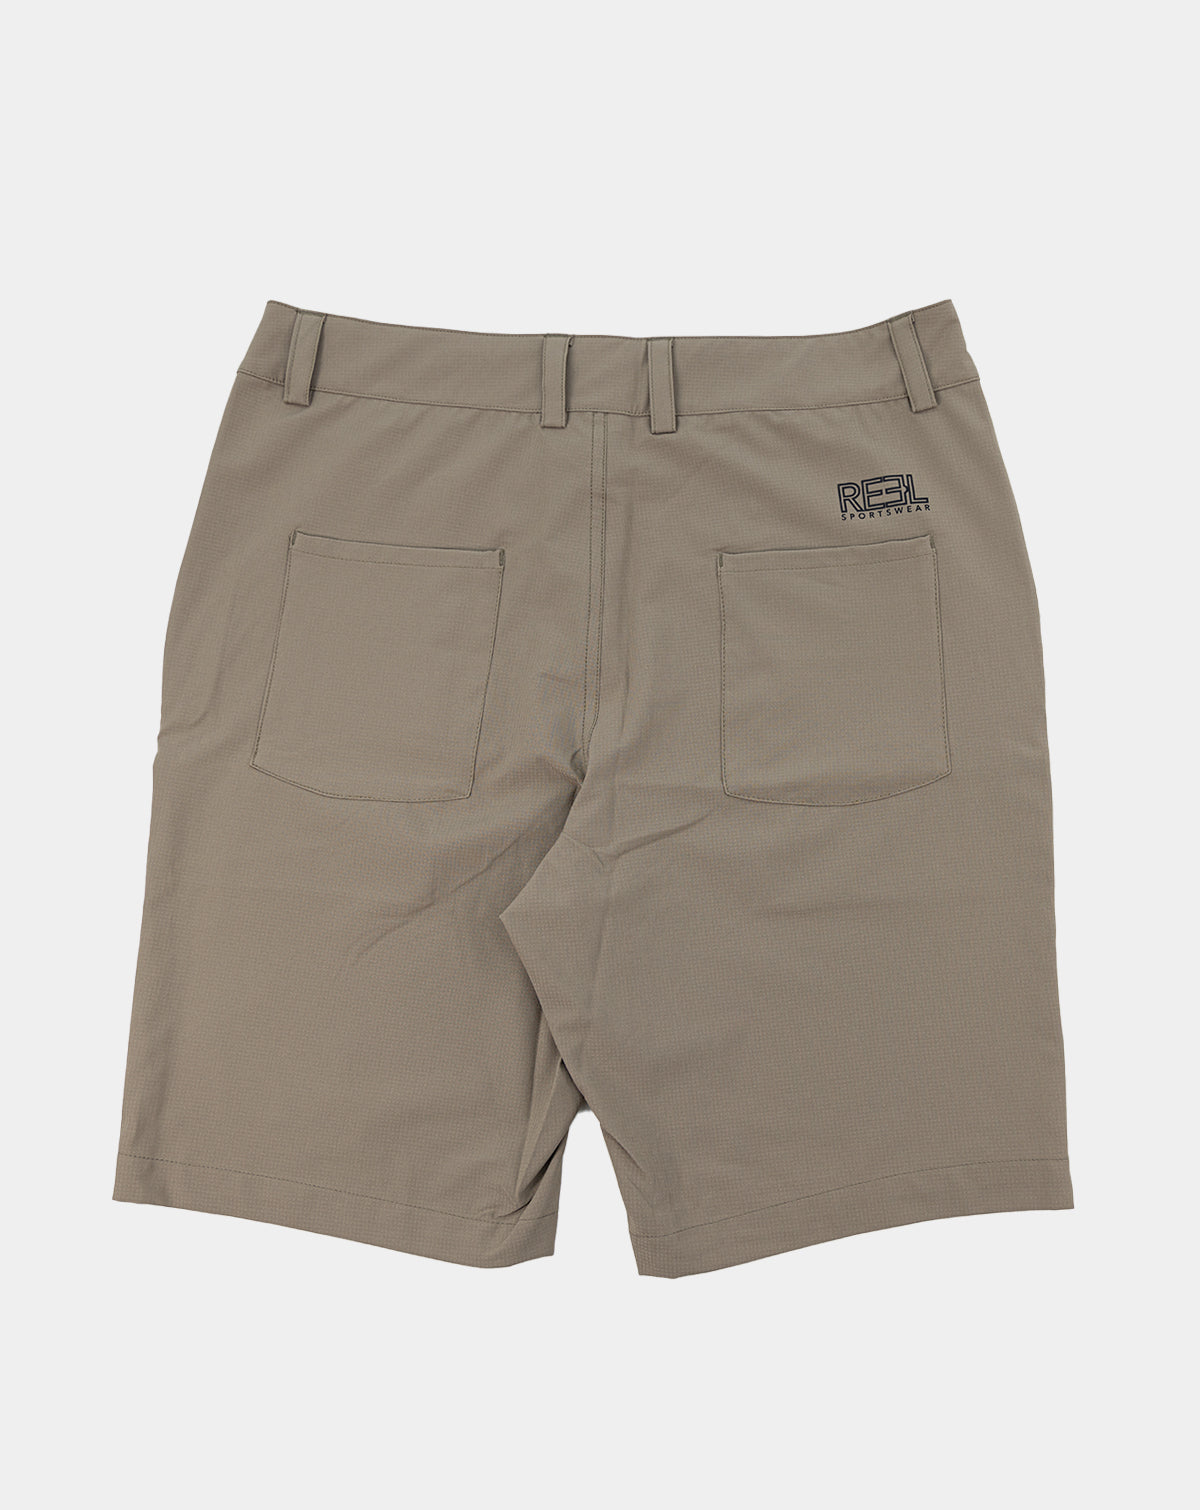 Tidal+ fishing Shorts - Reel Sportswear performance bottoms - Khaki